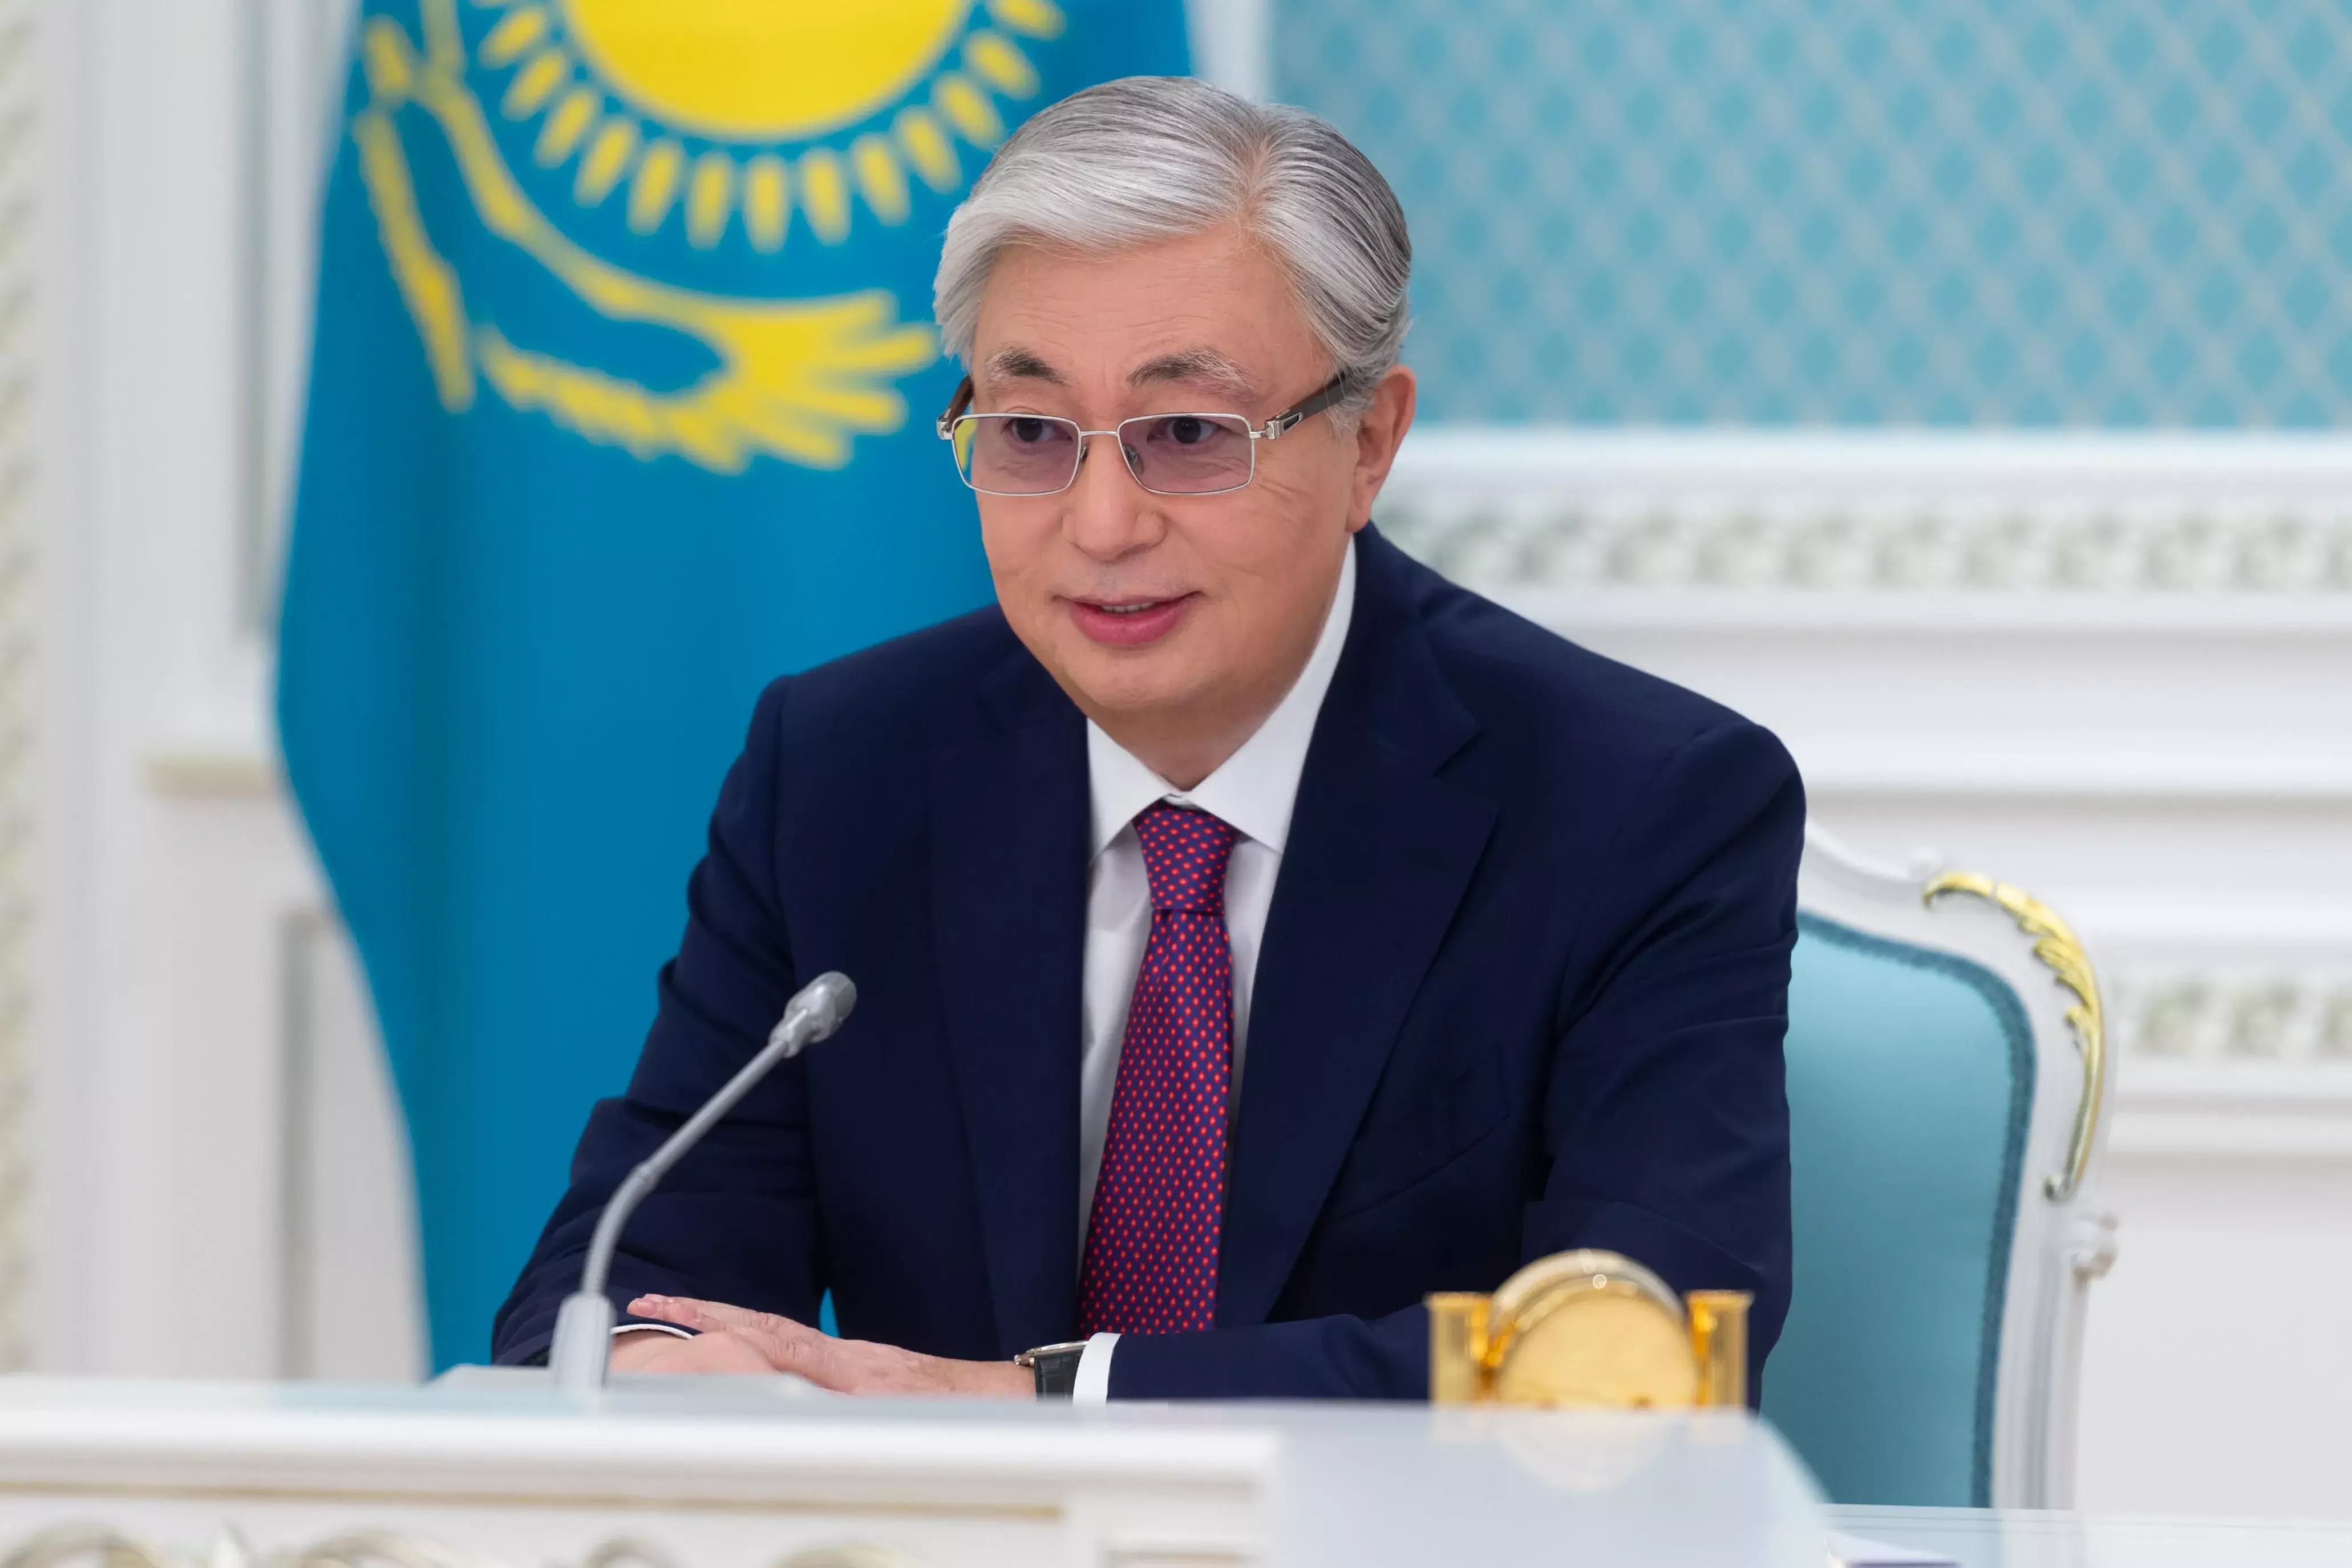 Токаев поздравил казахстанцев с Днем единства народа Казахстана